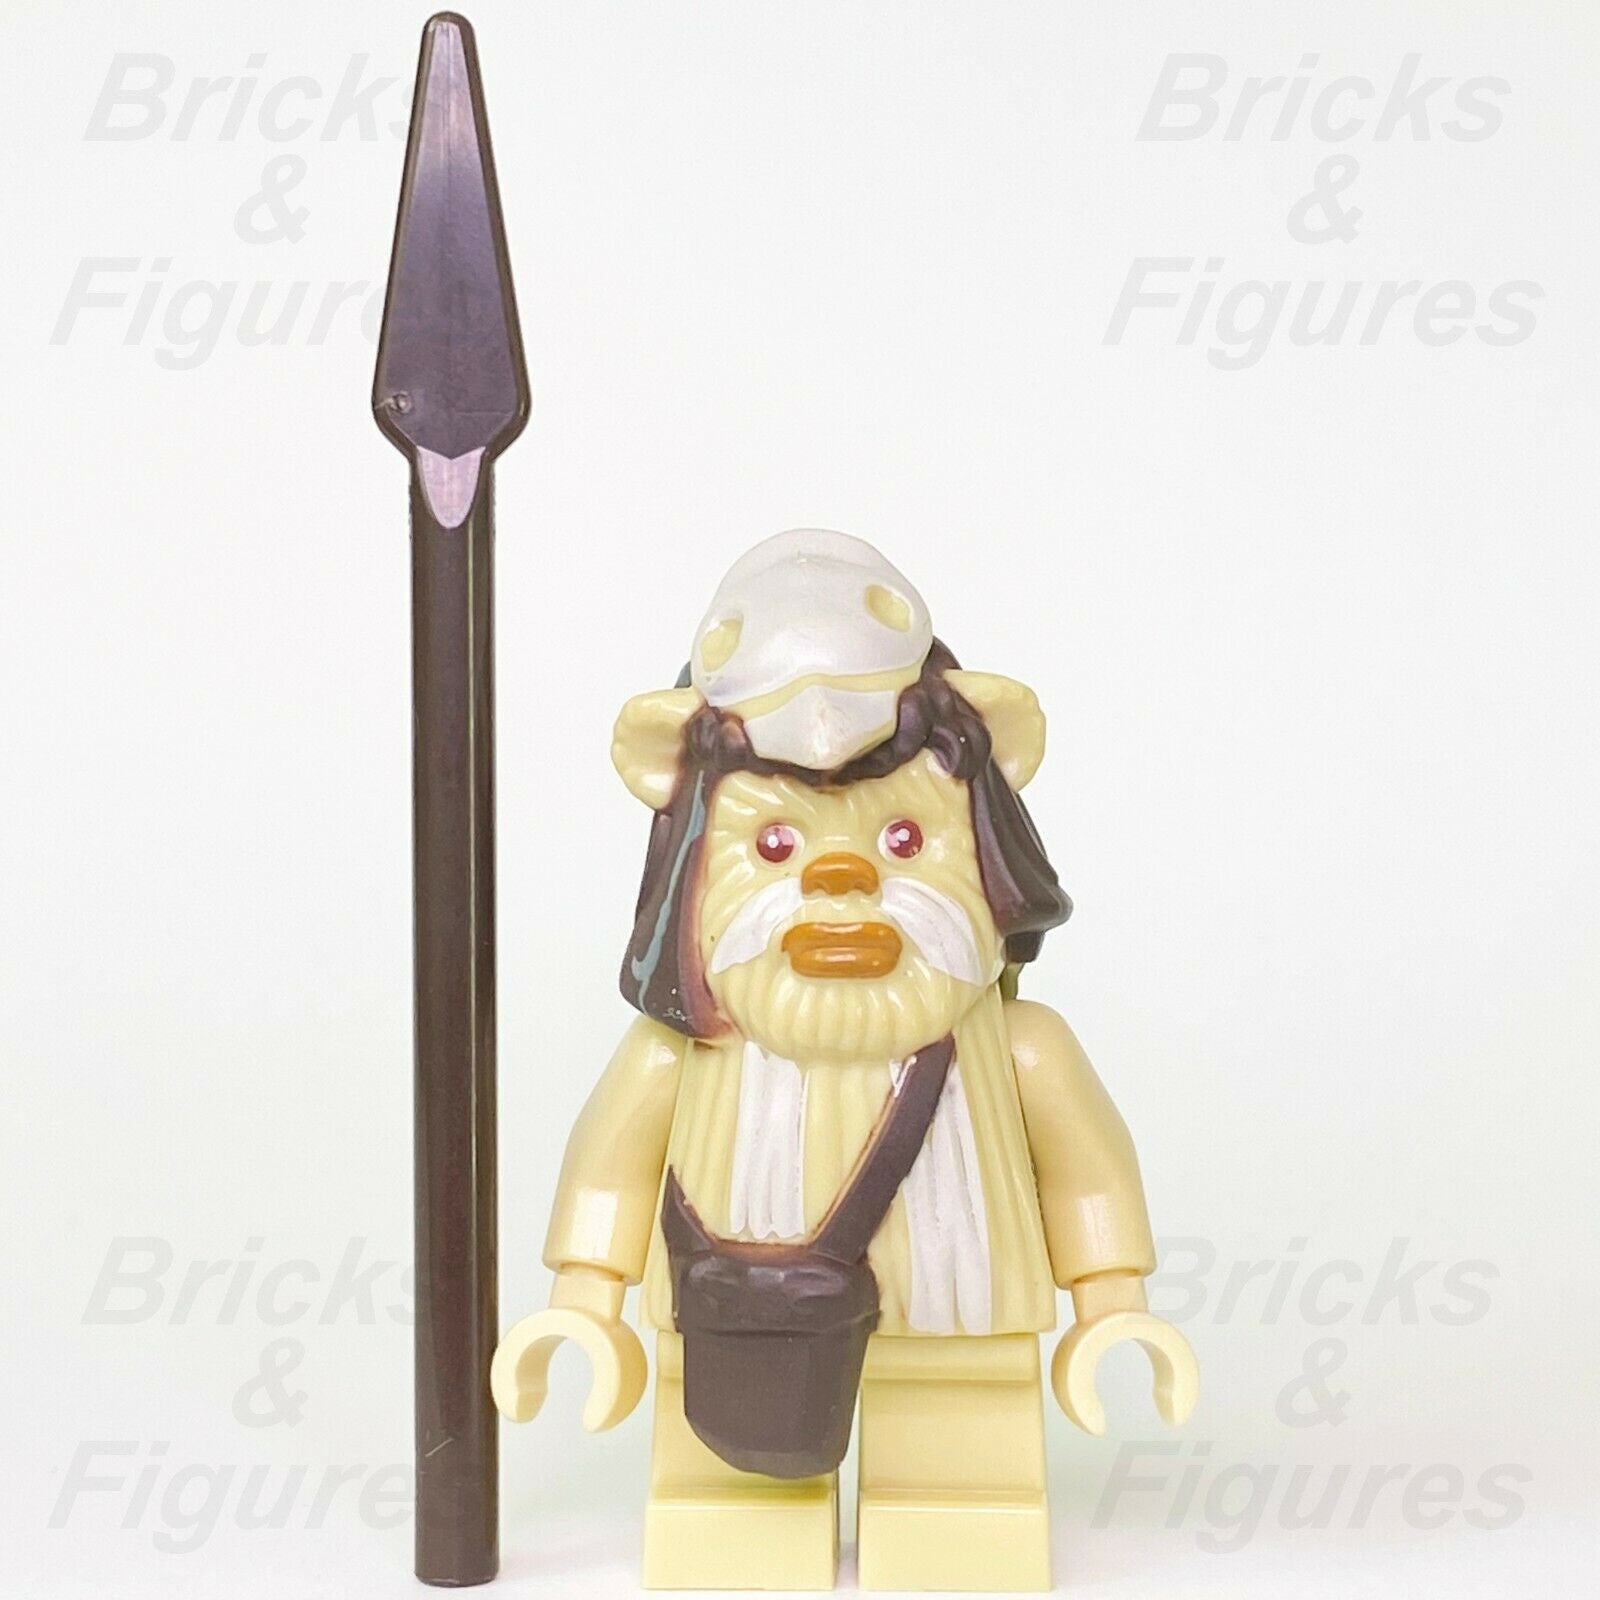 Lego® Star Wars Minifigure - Logray Ewok with Spear (7956)